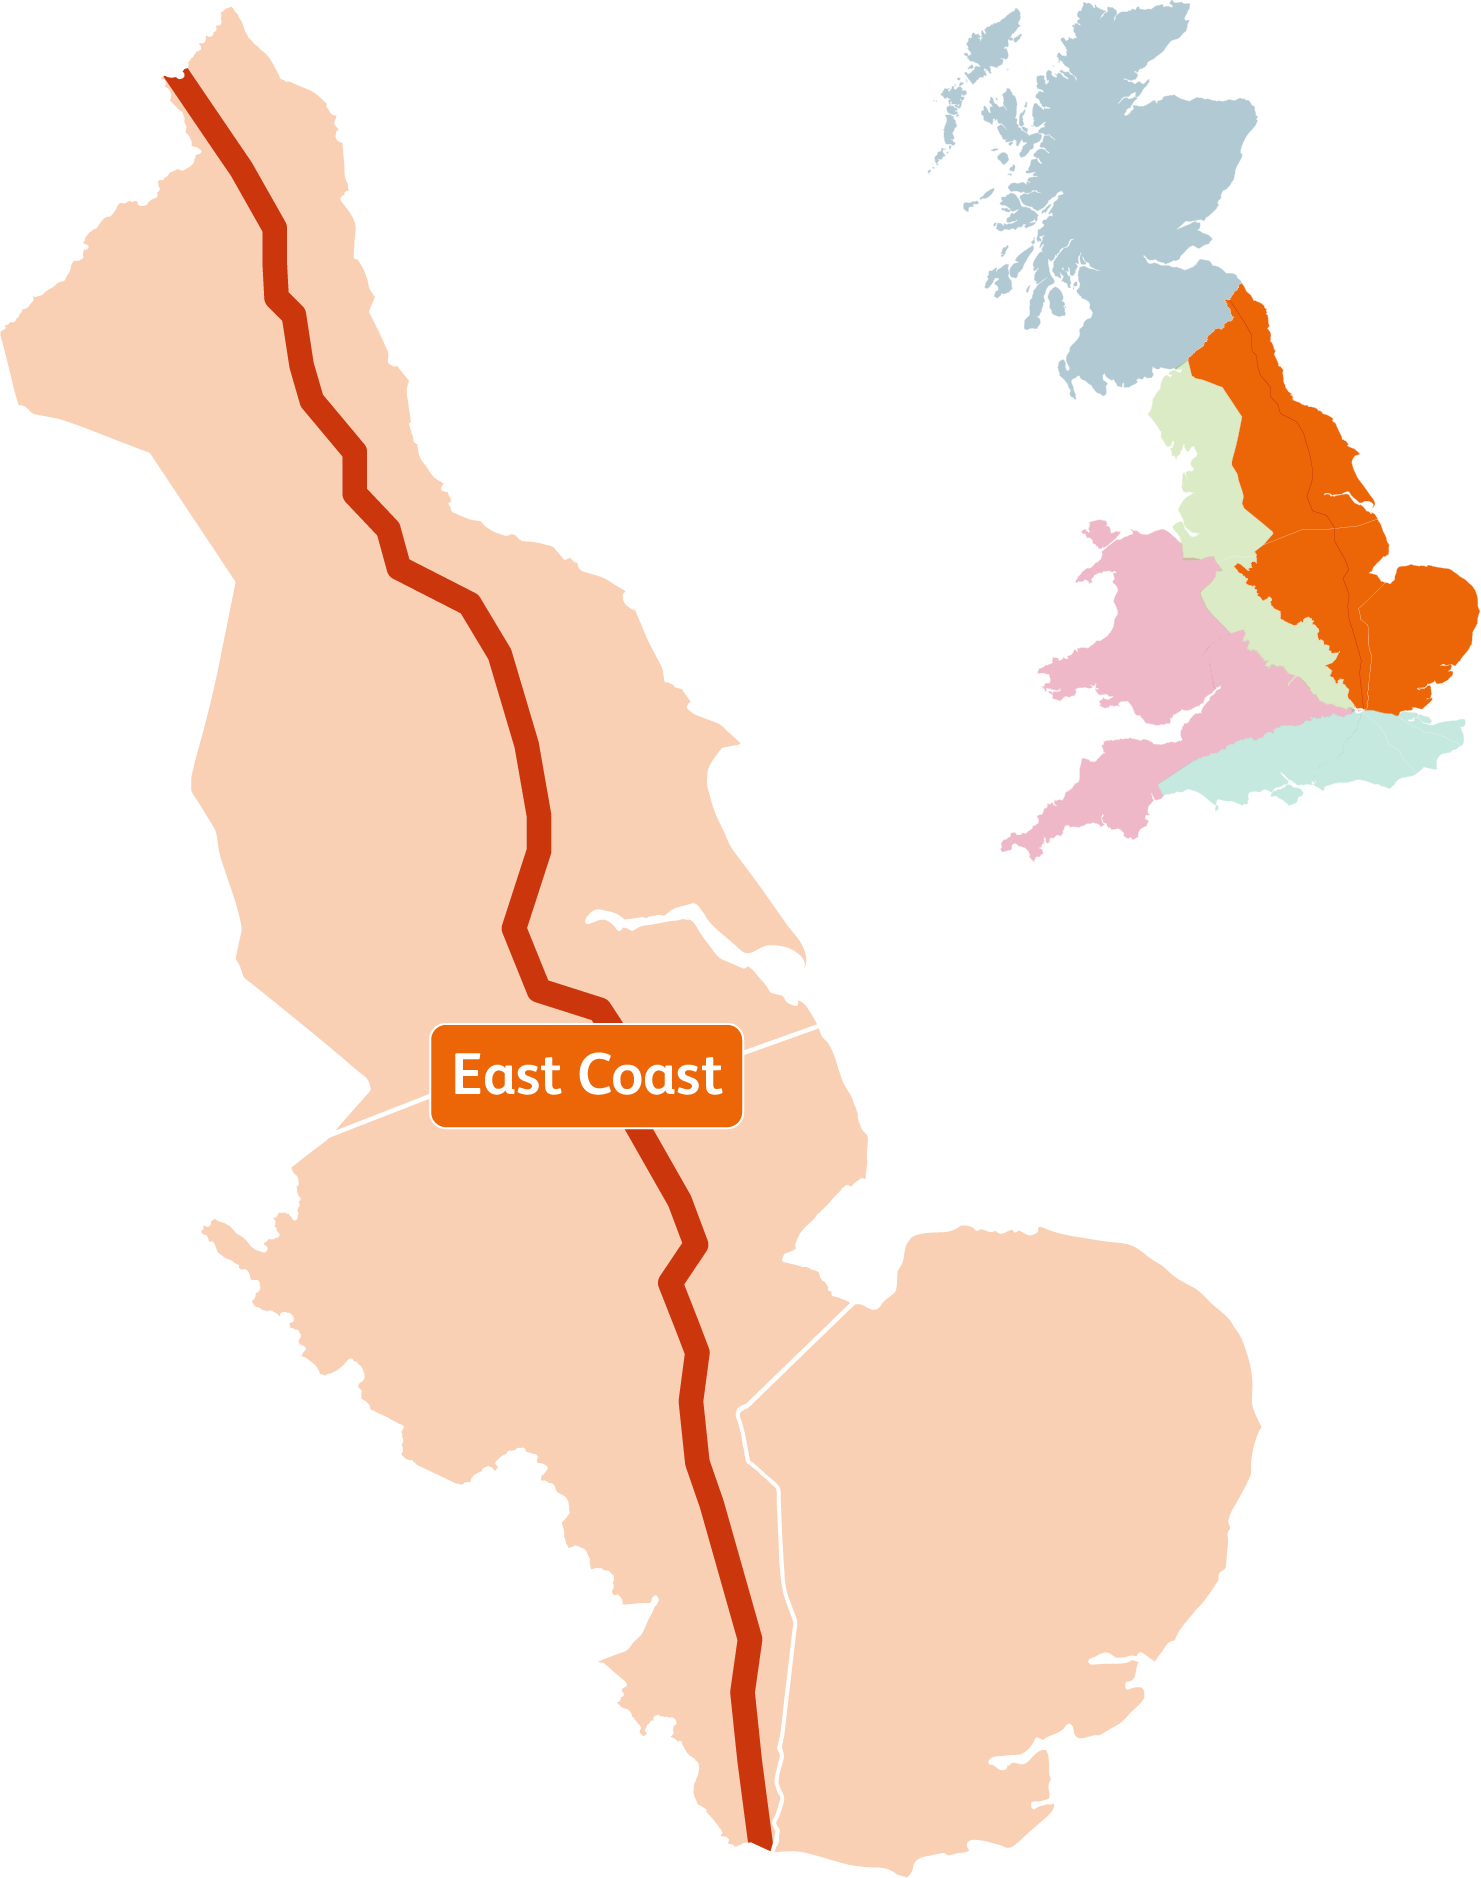 East Coast Route Network Rail